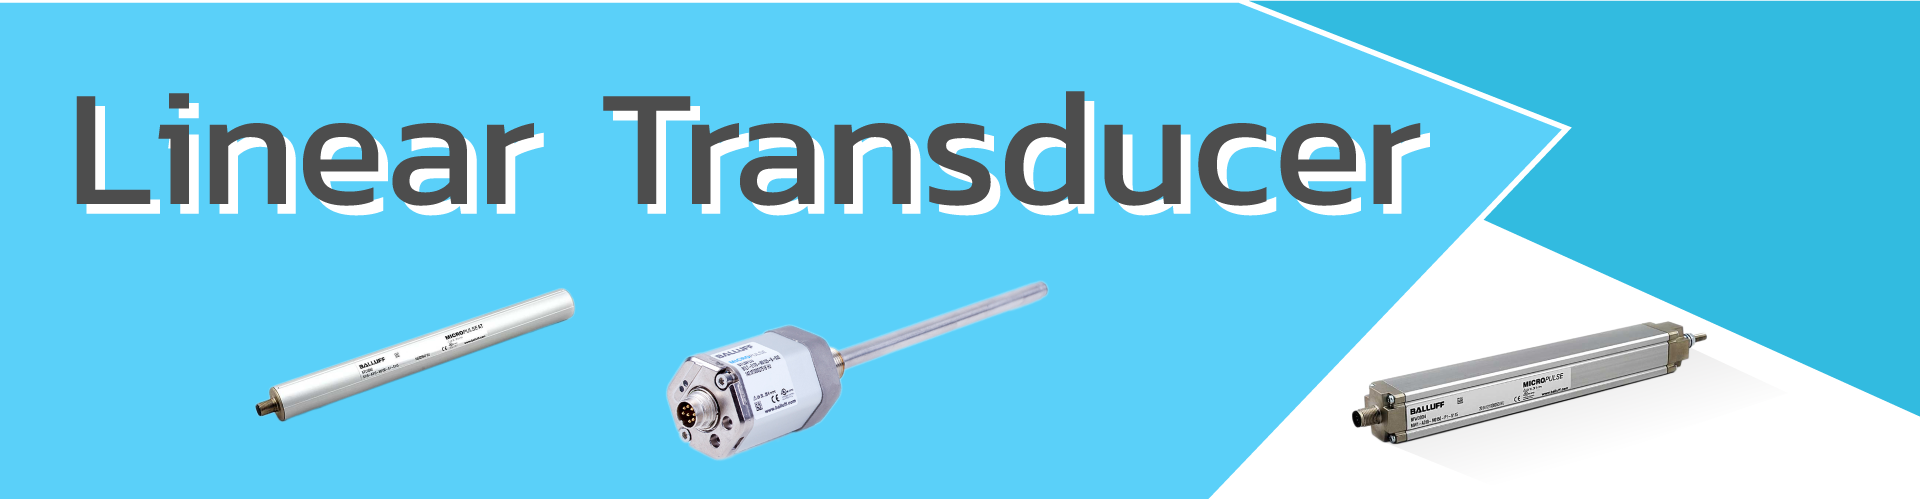 Linear Transducer